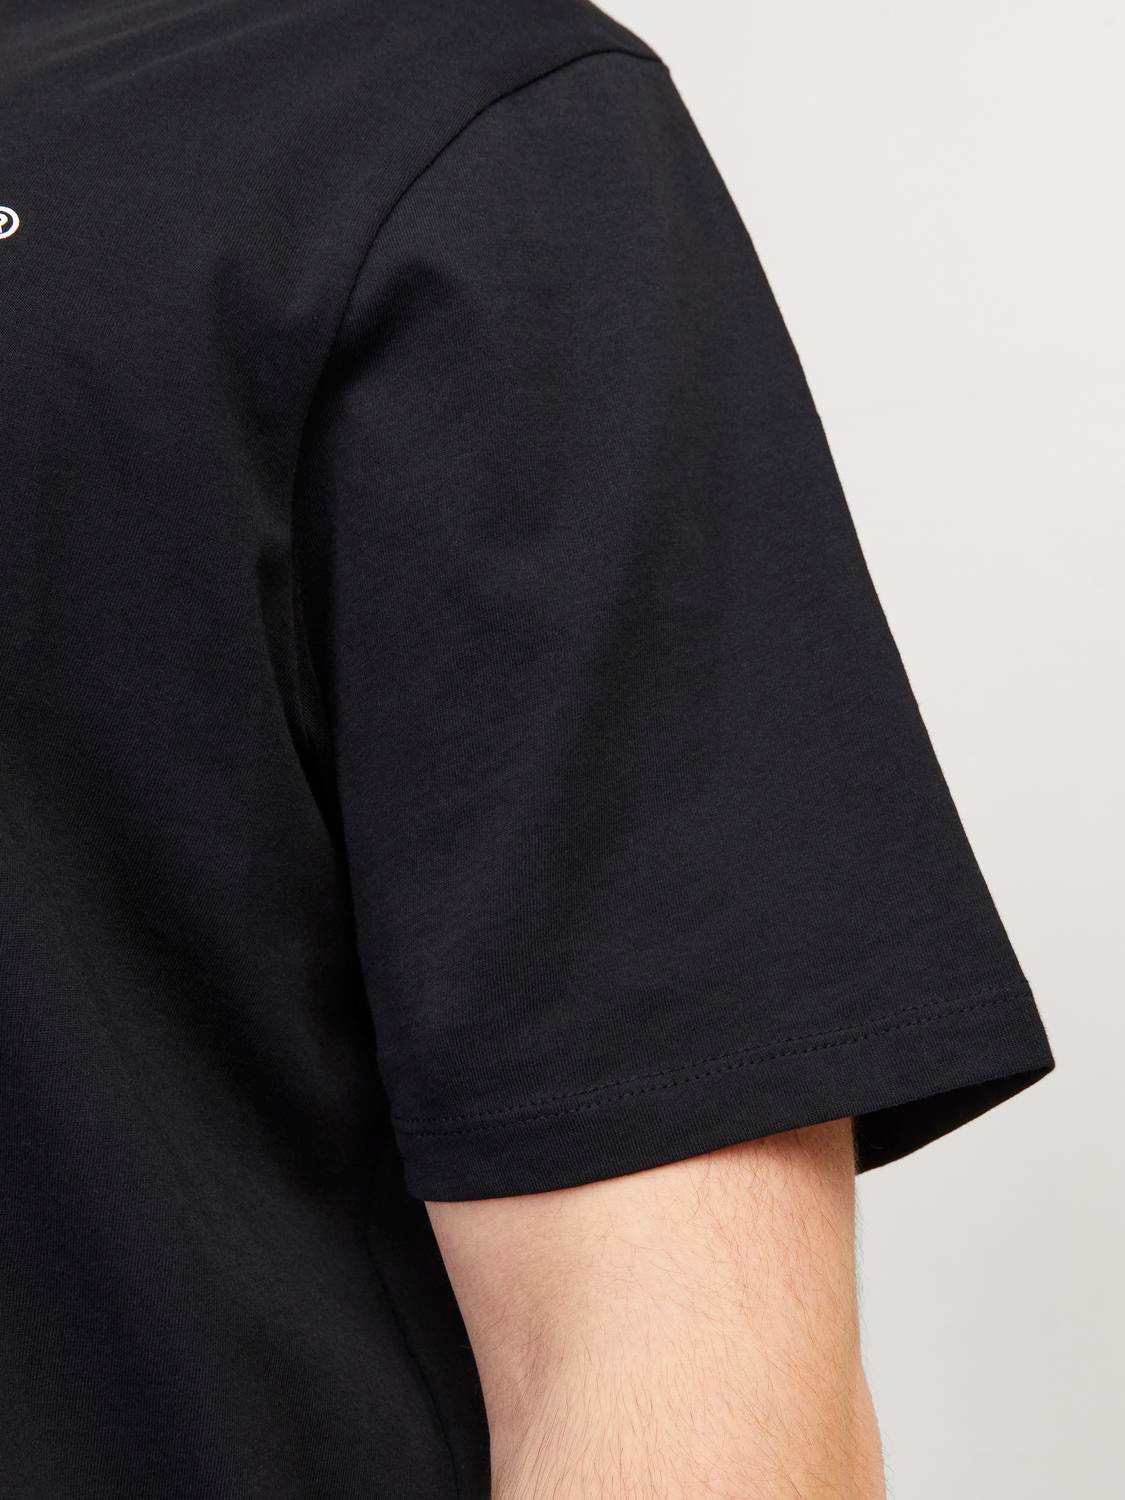 Jack & Jones Plus Size Logo T-skjorte -Black - 12184987